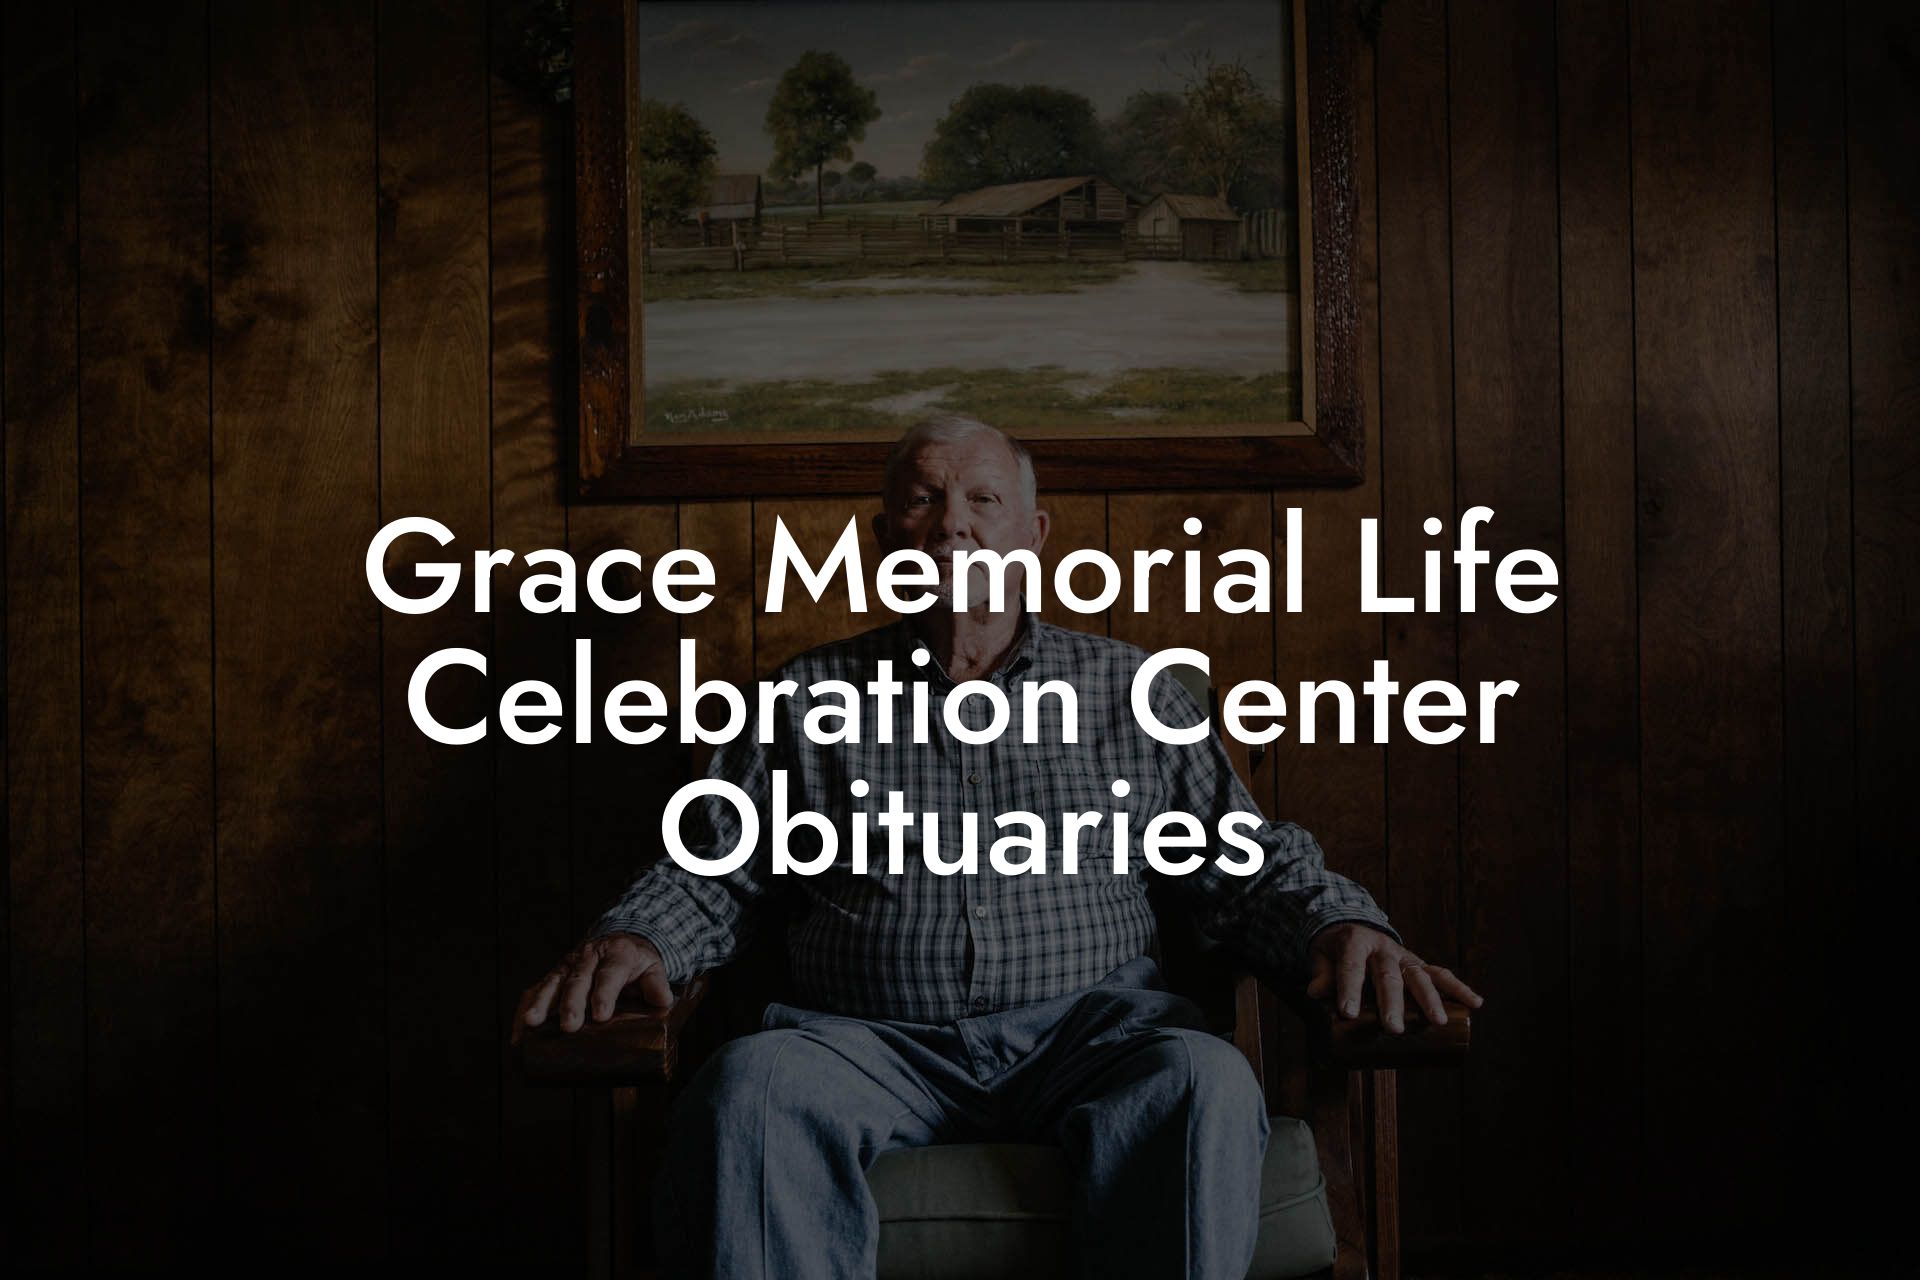 Grace Memorial Life Celebration Center Obituaries